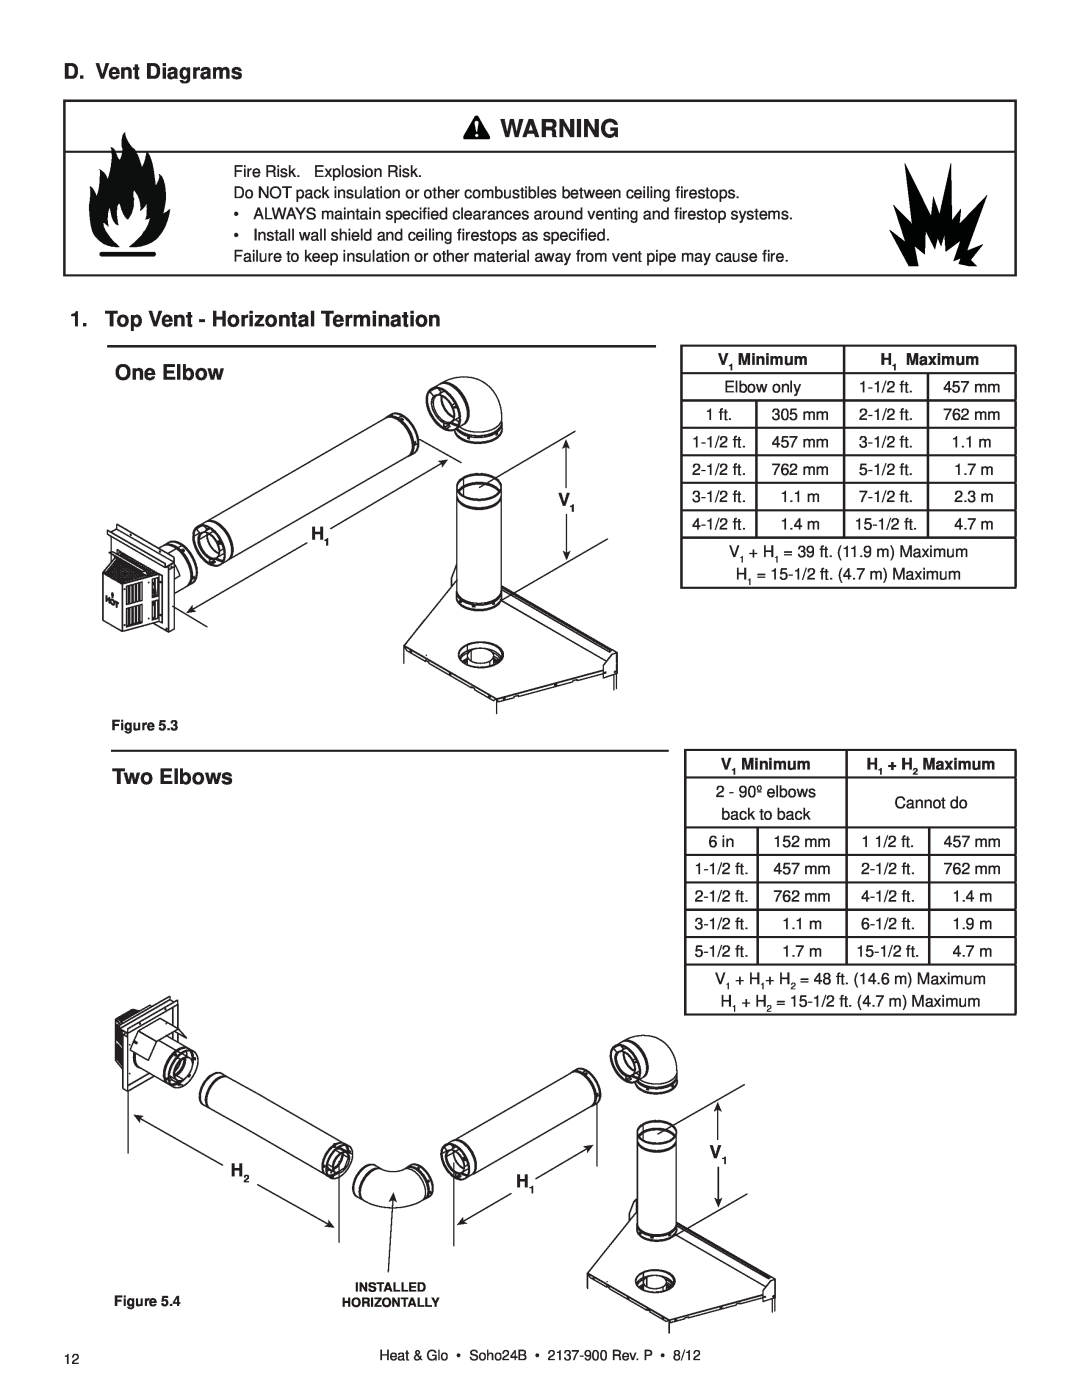 Heat & Glo LifeStyle 2137-900 D. Vent Diagrams, Top Vent - Horizontal Termination, One Elbow, Two Elbows, V1 Minimum 